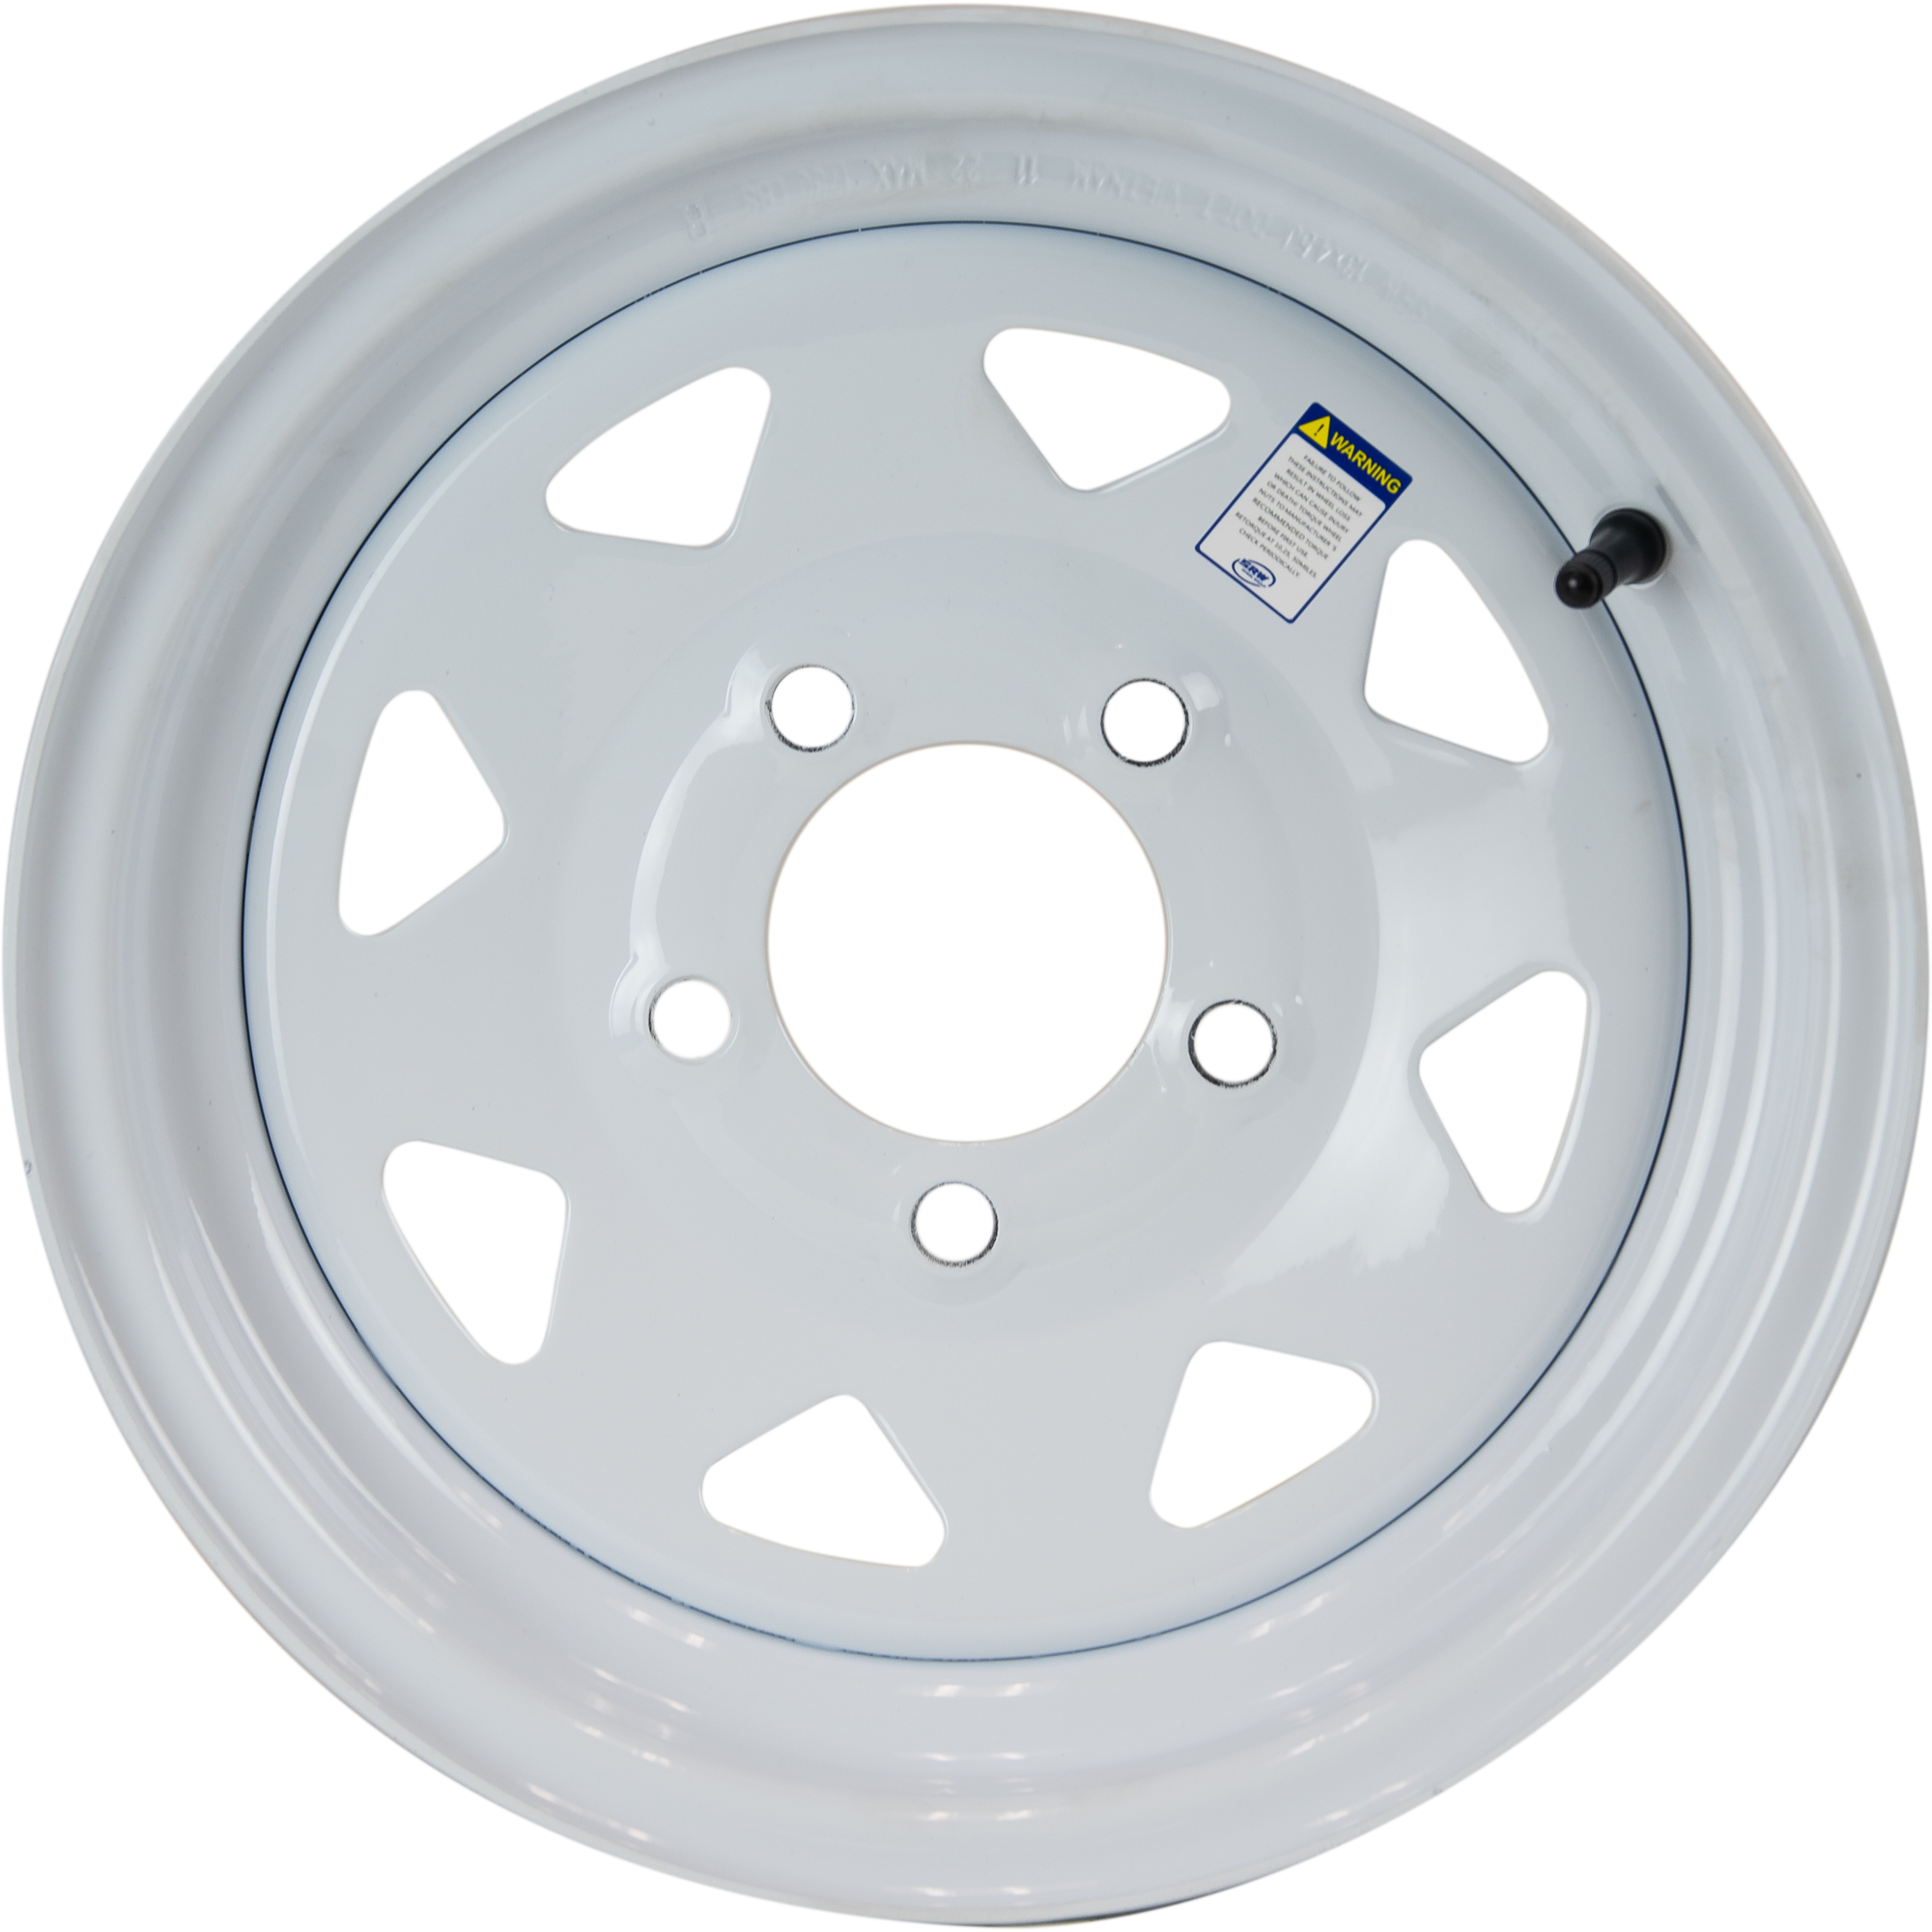 HI-RUN, Steel Wheel for Highway Trailer, Tire Size 13X4.5 5-4.5, Bolt Holes (qty.) 5, Model KW1004